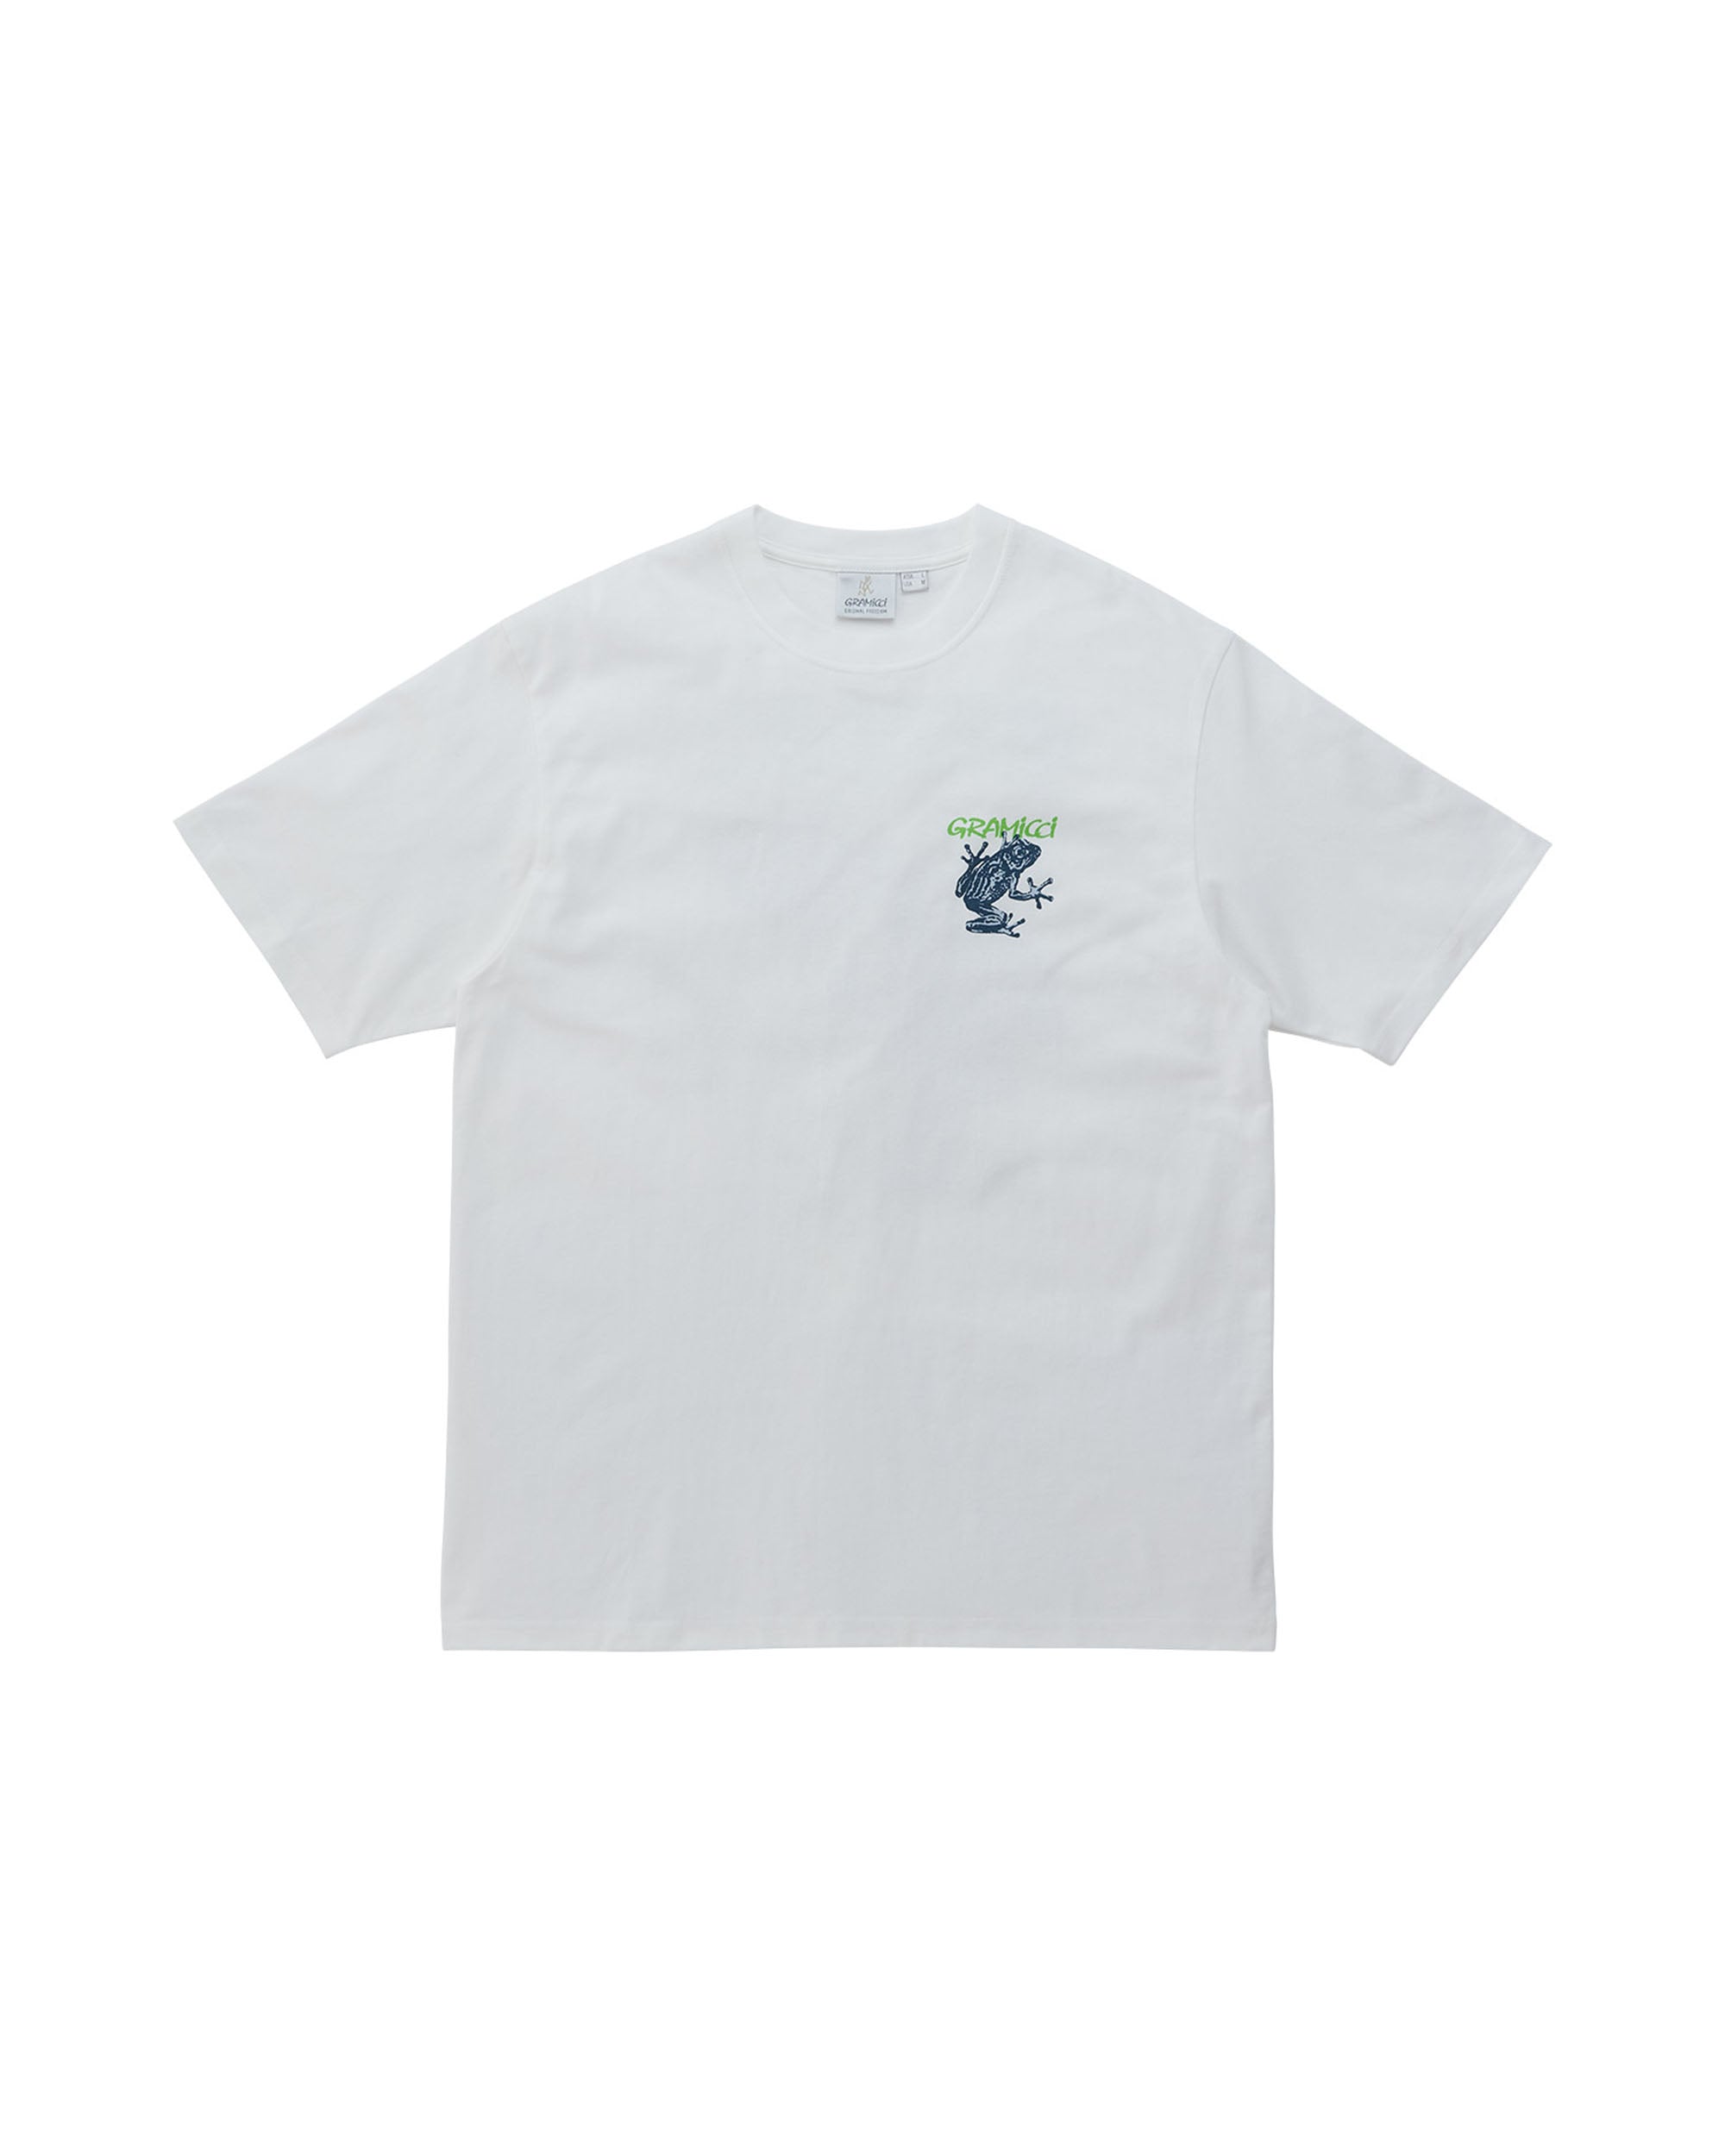 Sticky Frog T-Shirt - White